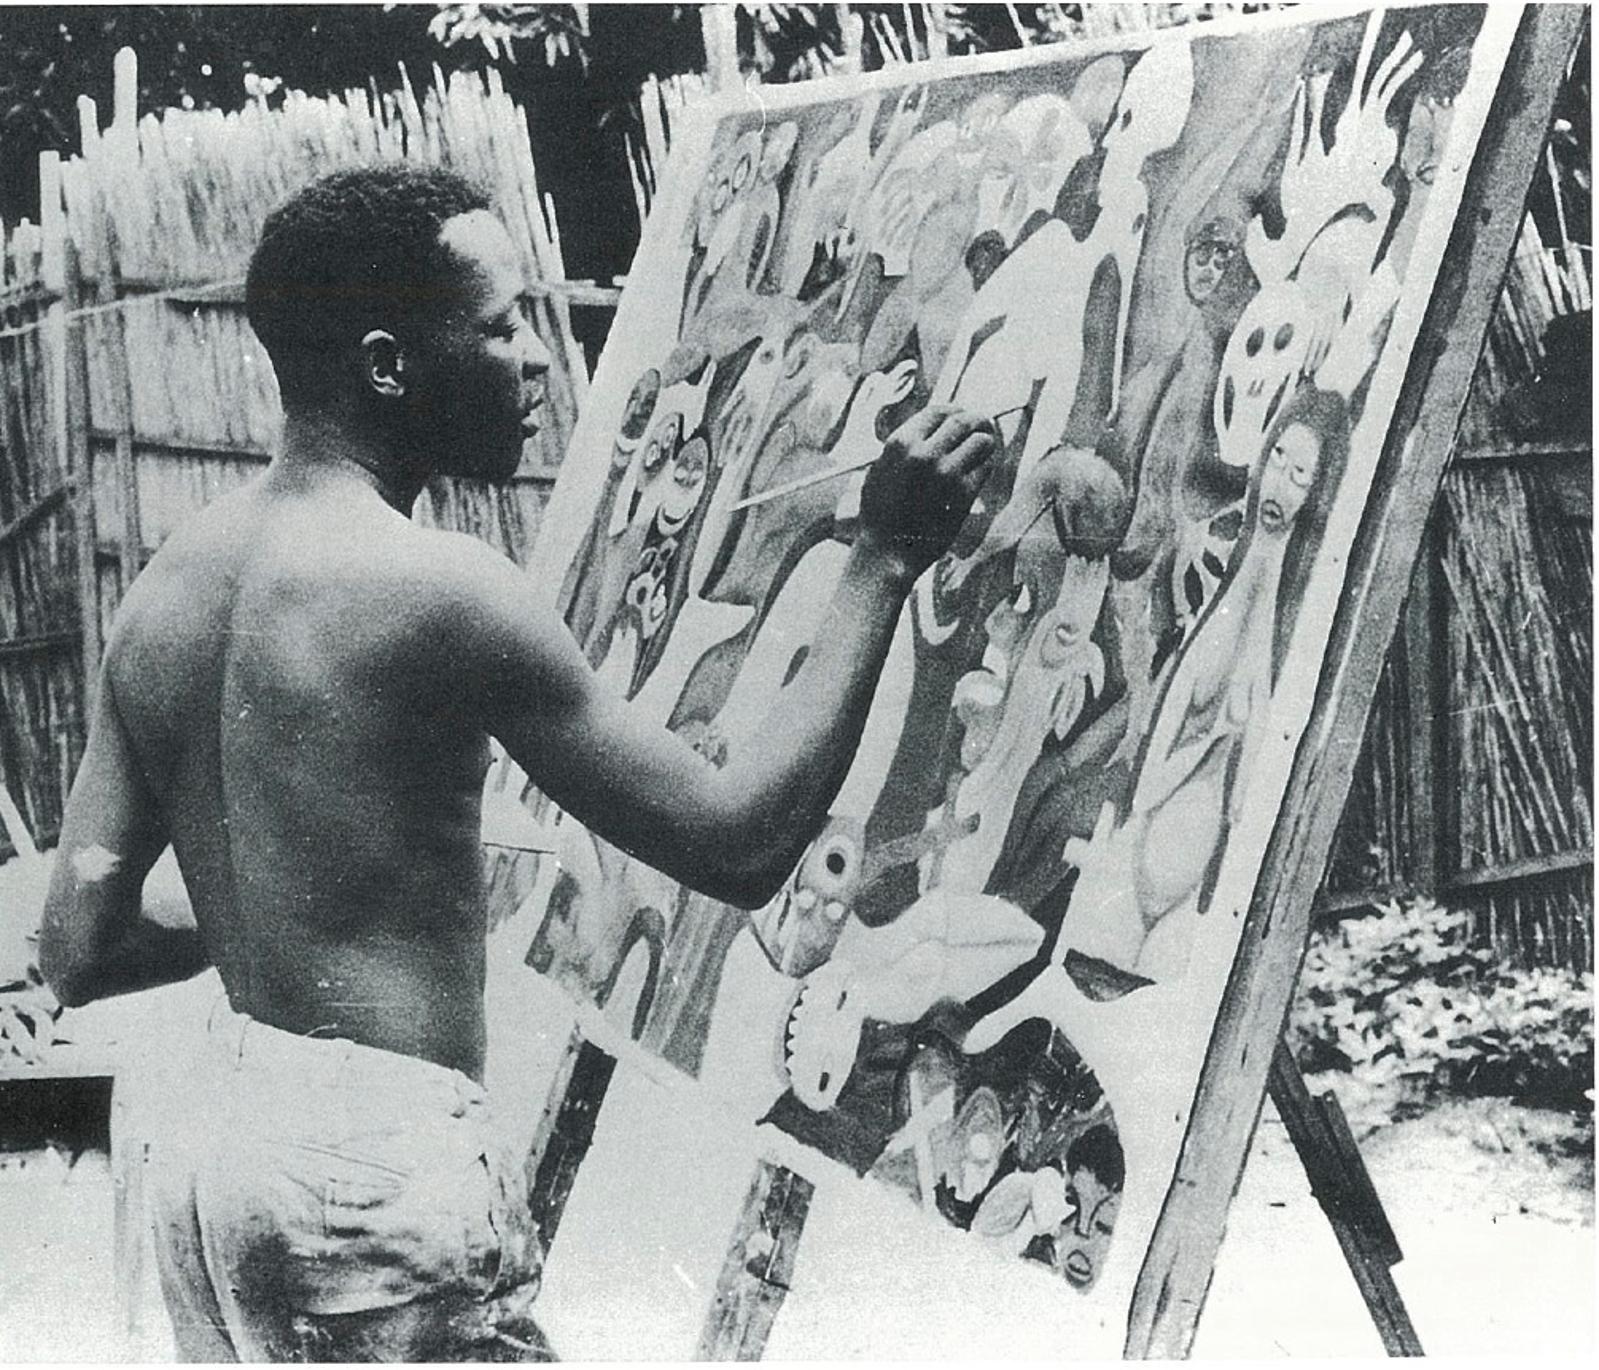 African contemporary art pioneer